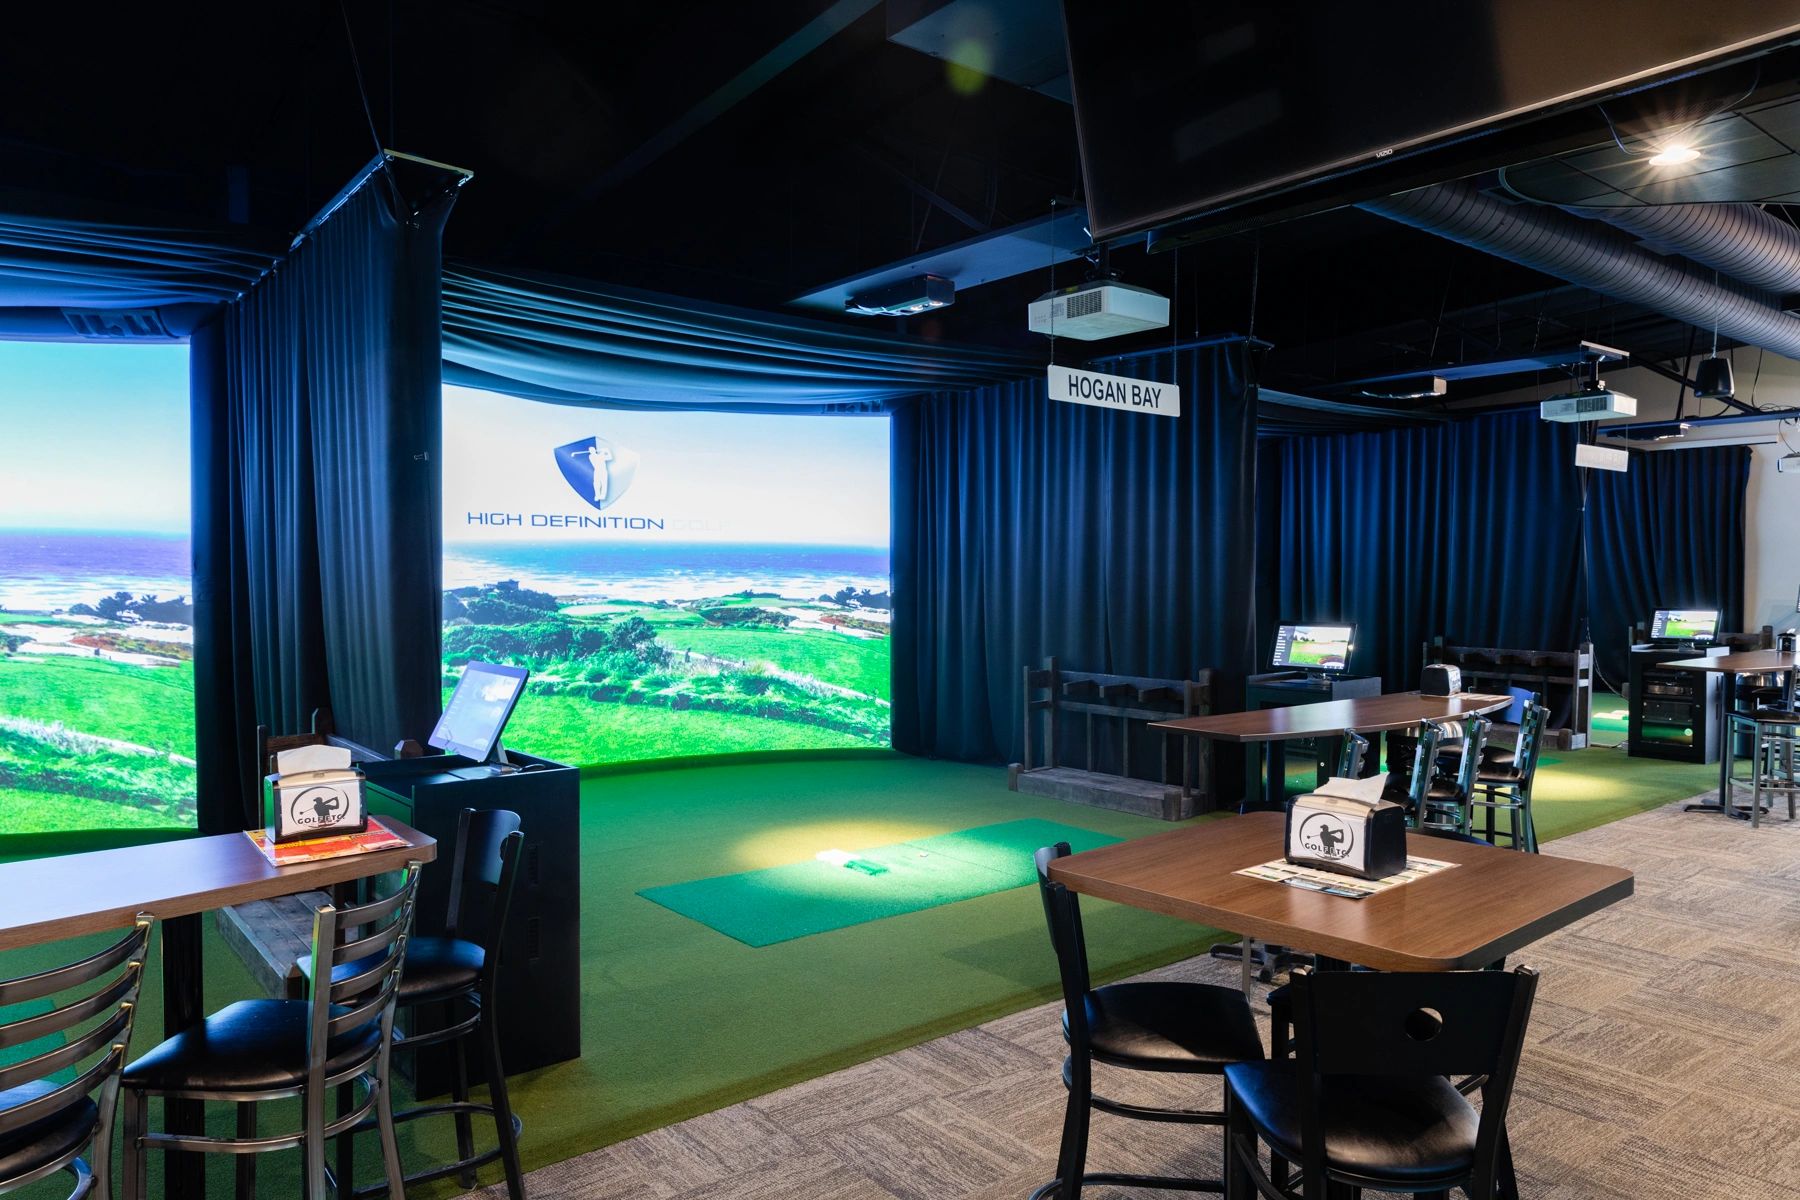 High Definition Golf Simulators
Indoor Golf Center
Lessons
Clubfitting
Club Repair
Golf Equipment